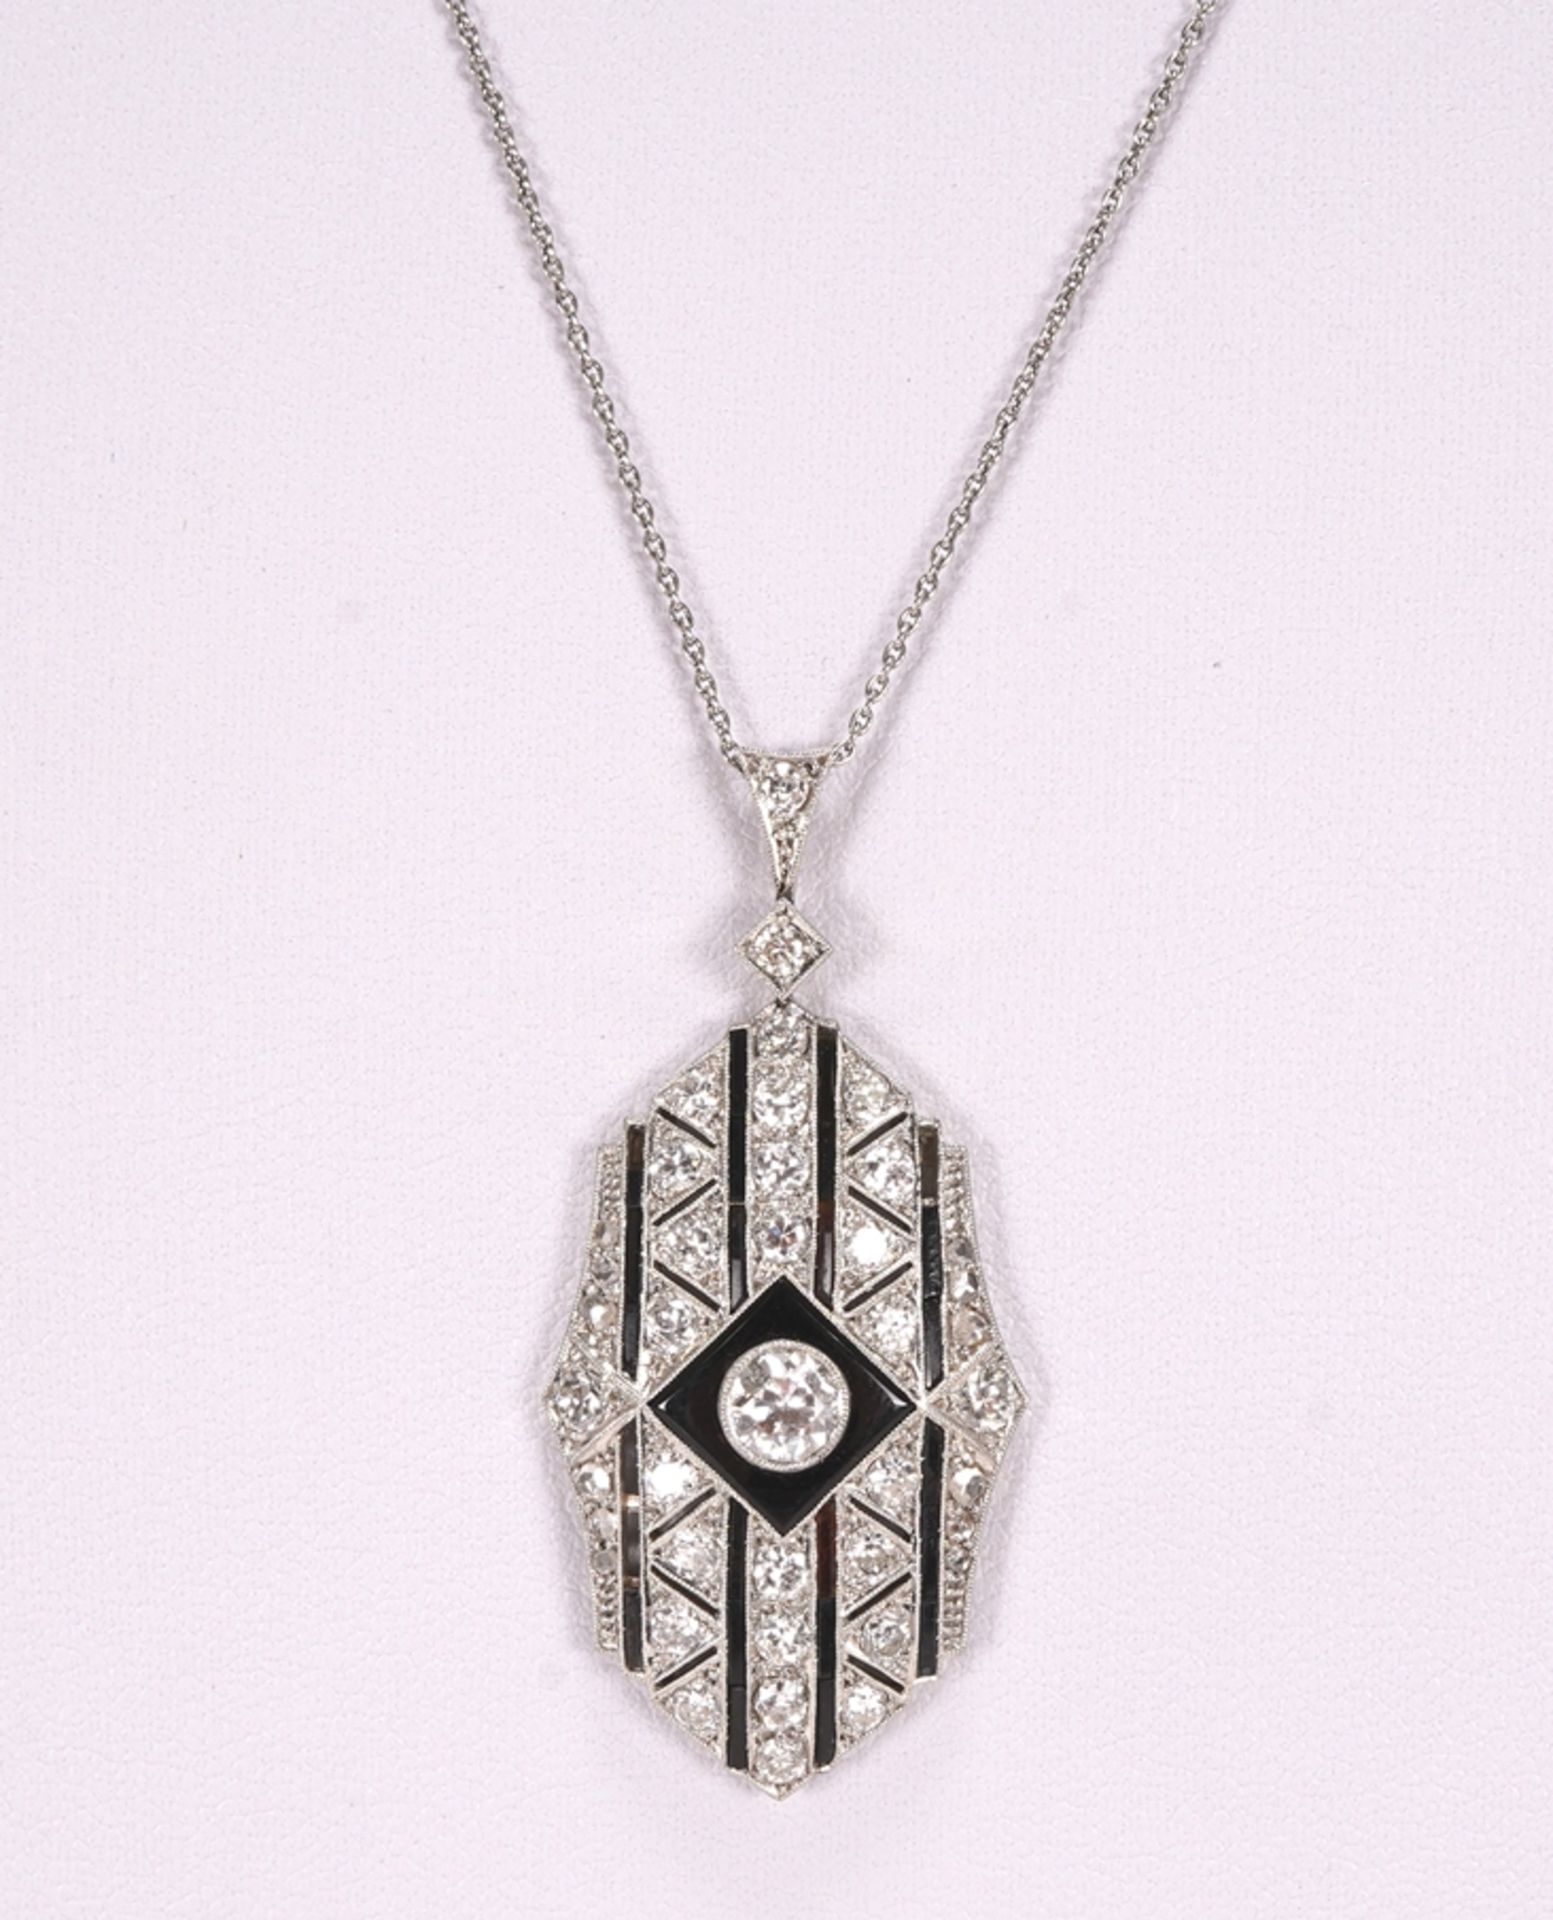 Art Deco pendant on chain - Image 2 of 2